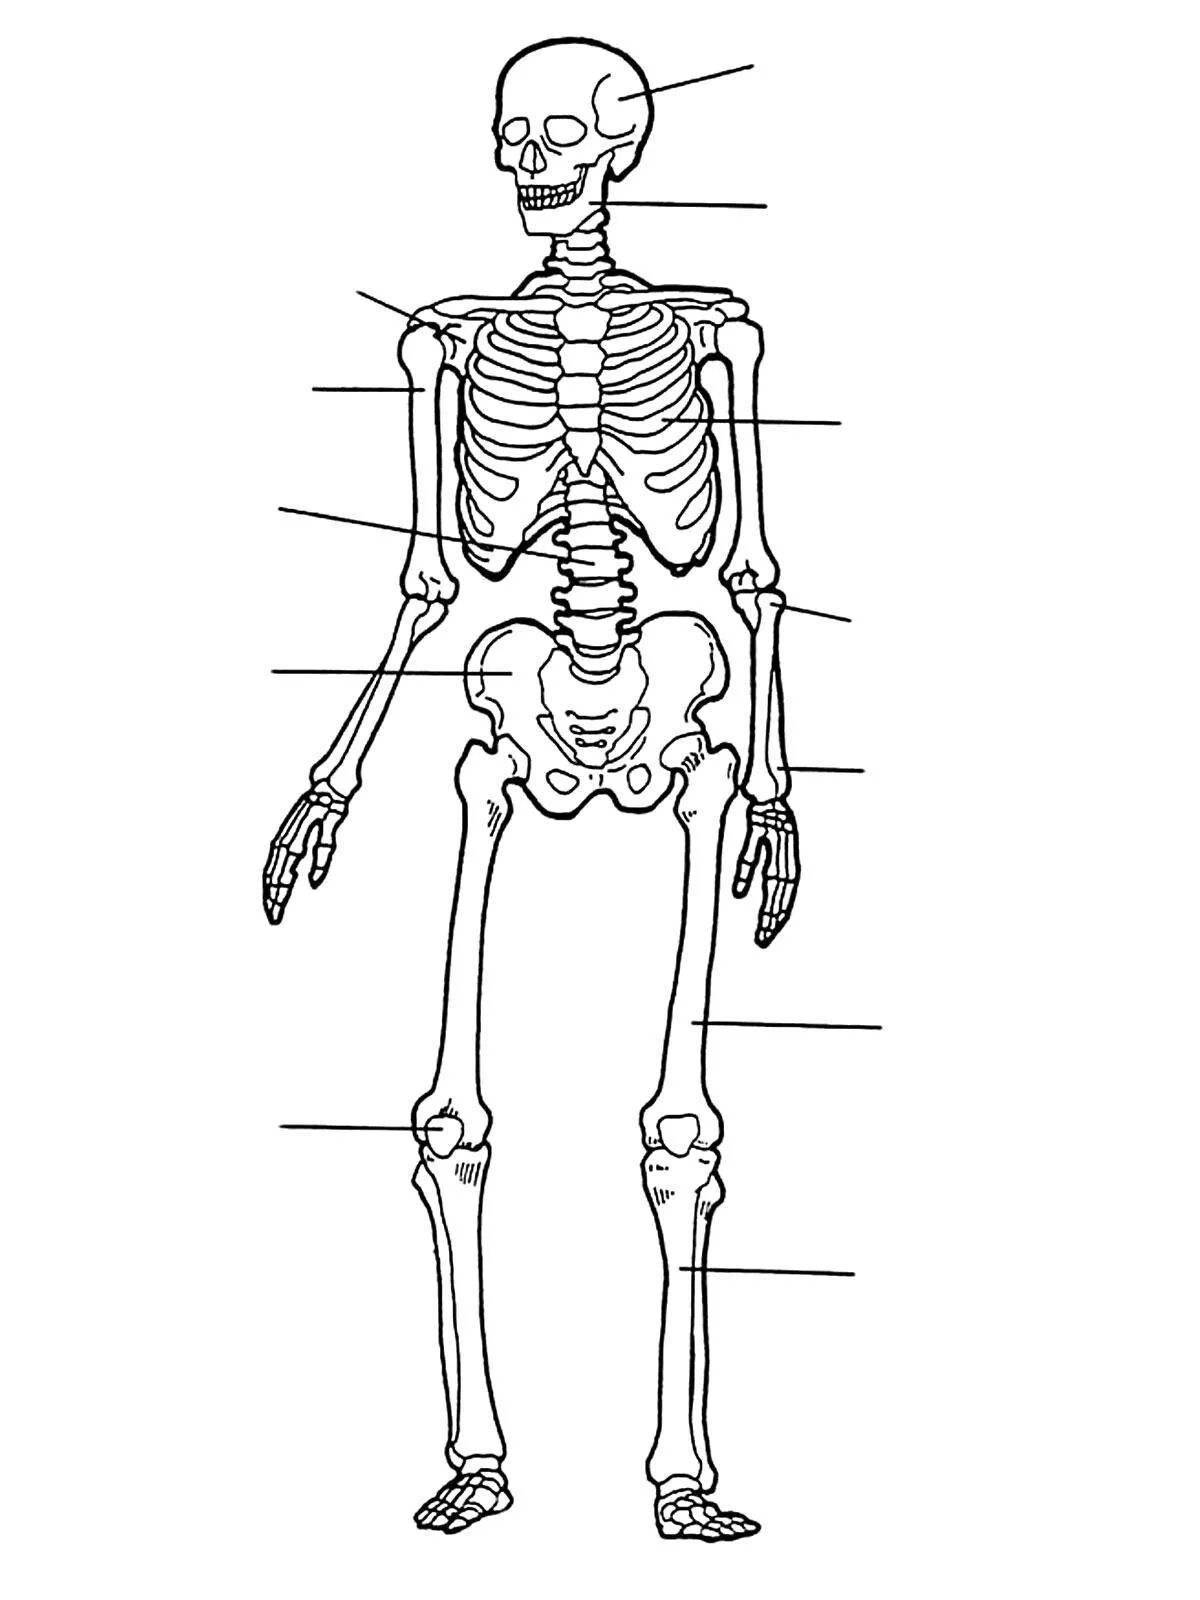 Human anatomy for kids #5